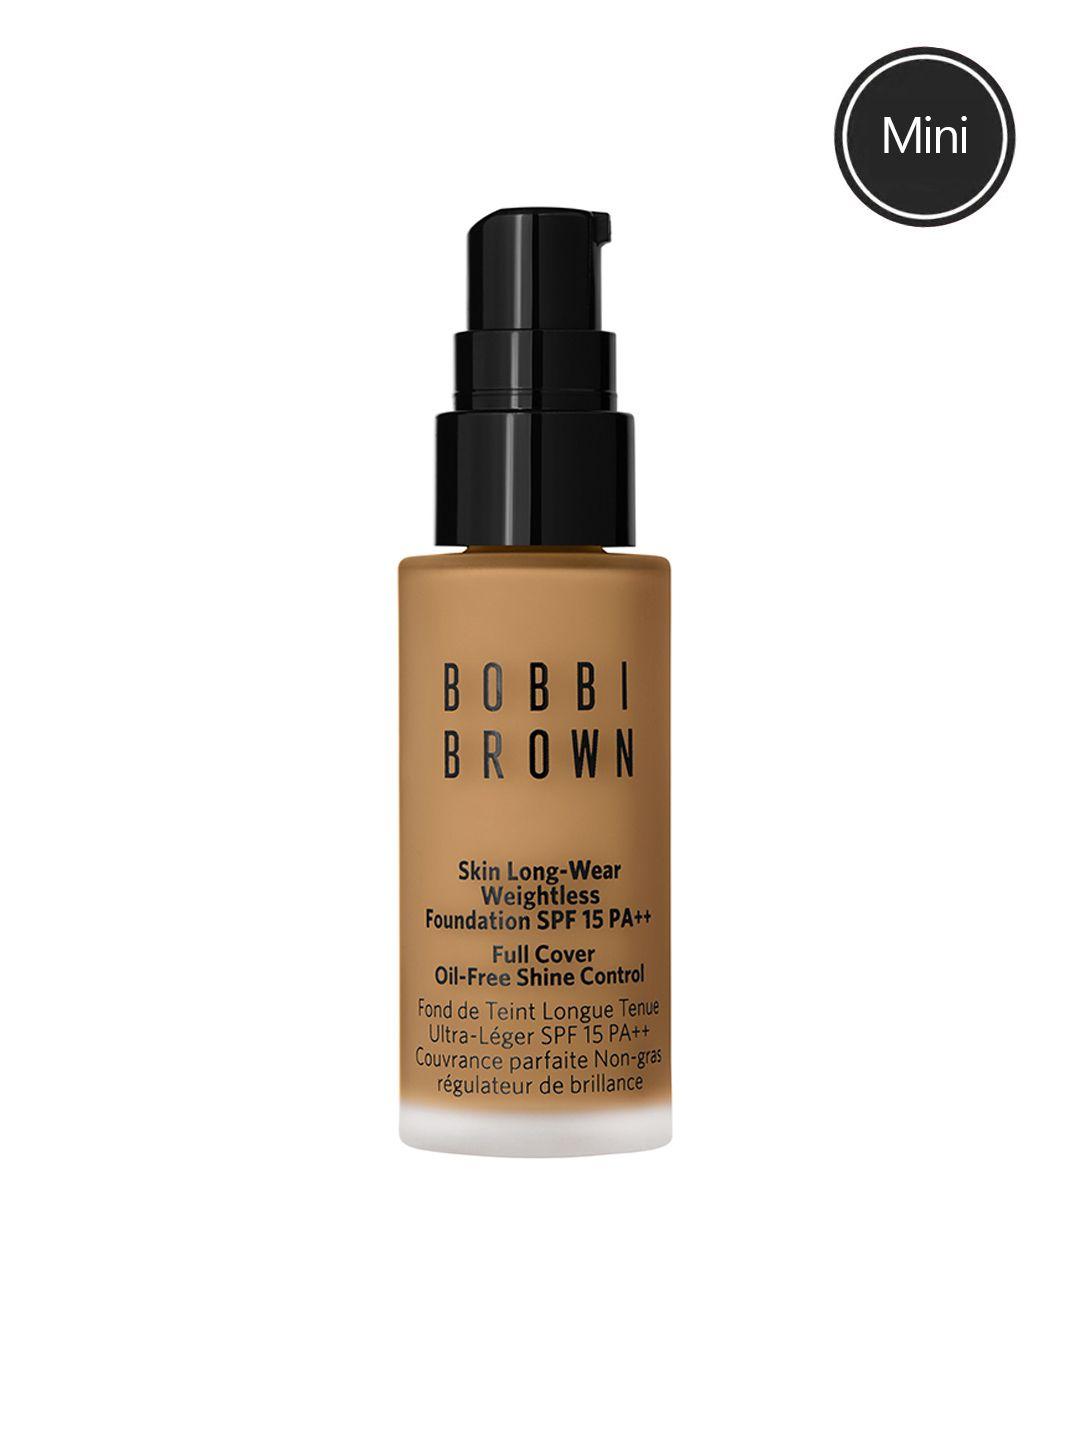 bobbi brown mini skin long-wear spf 15 weightless foundation 13 ml - warm natural